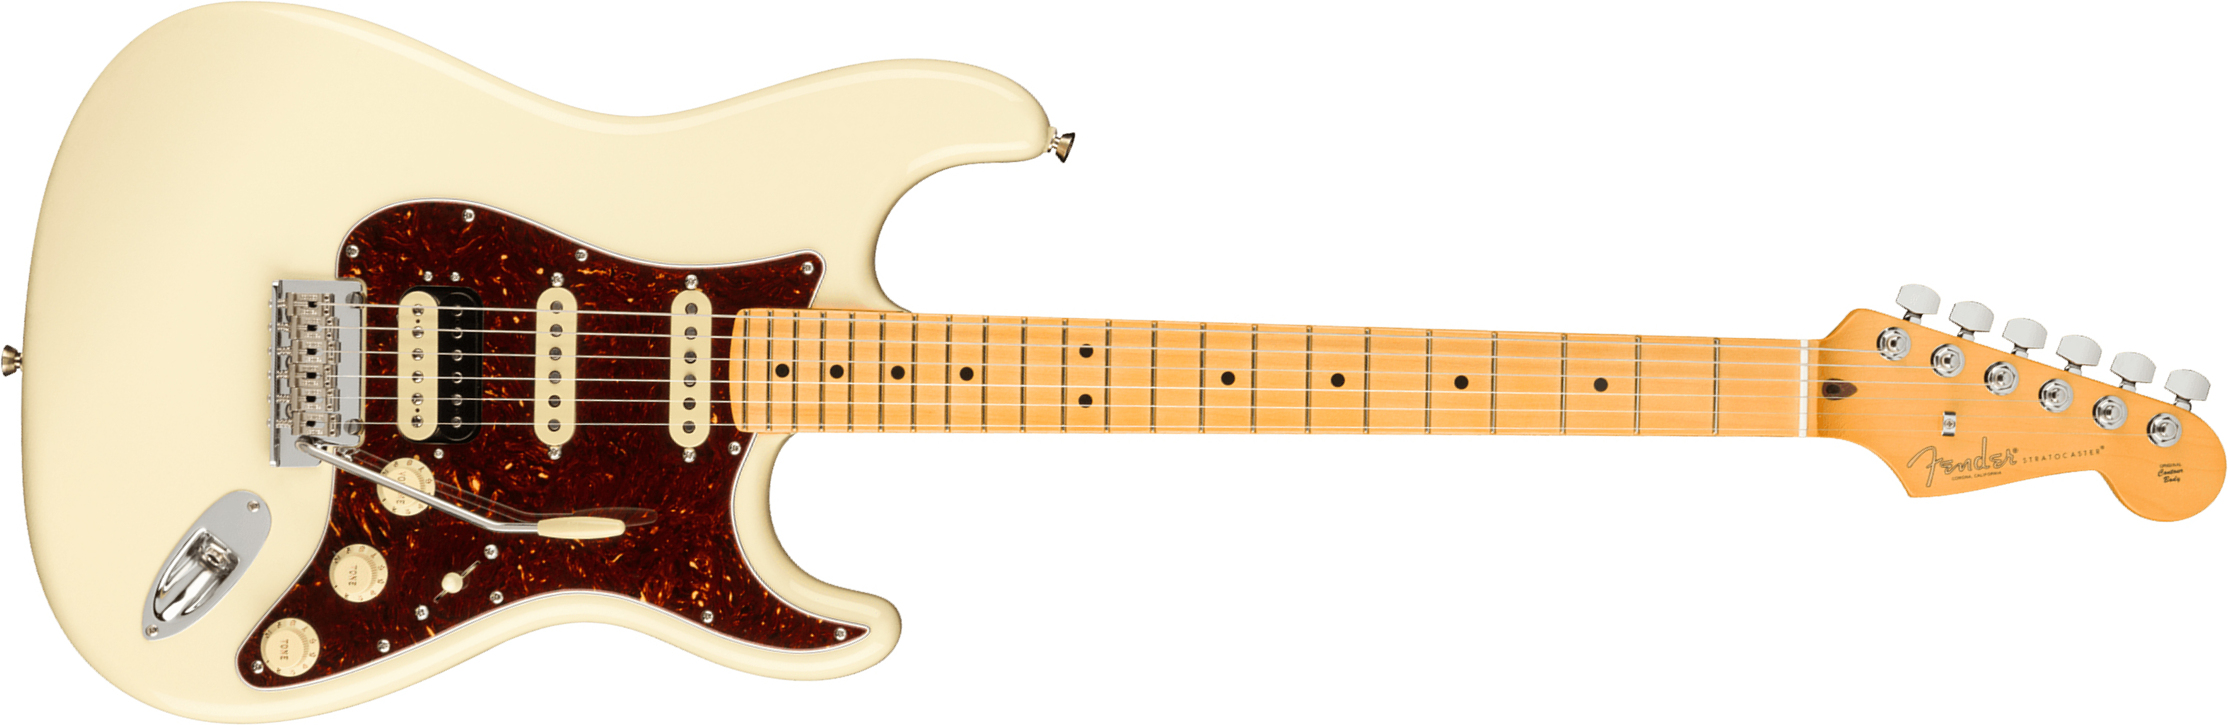 Fender Strat American Professional Ii Hss Usa Mn - Olympic White - Guitarra eléctrica con forma de str. - Main picture